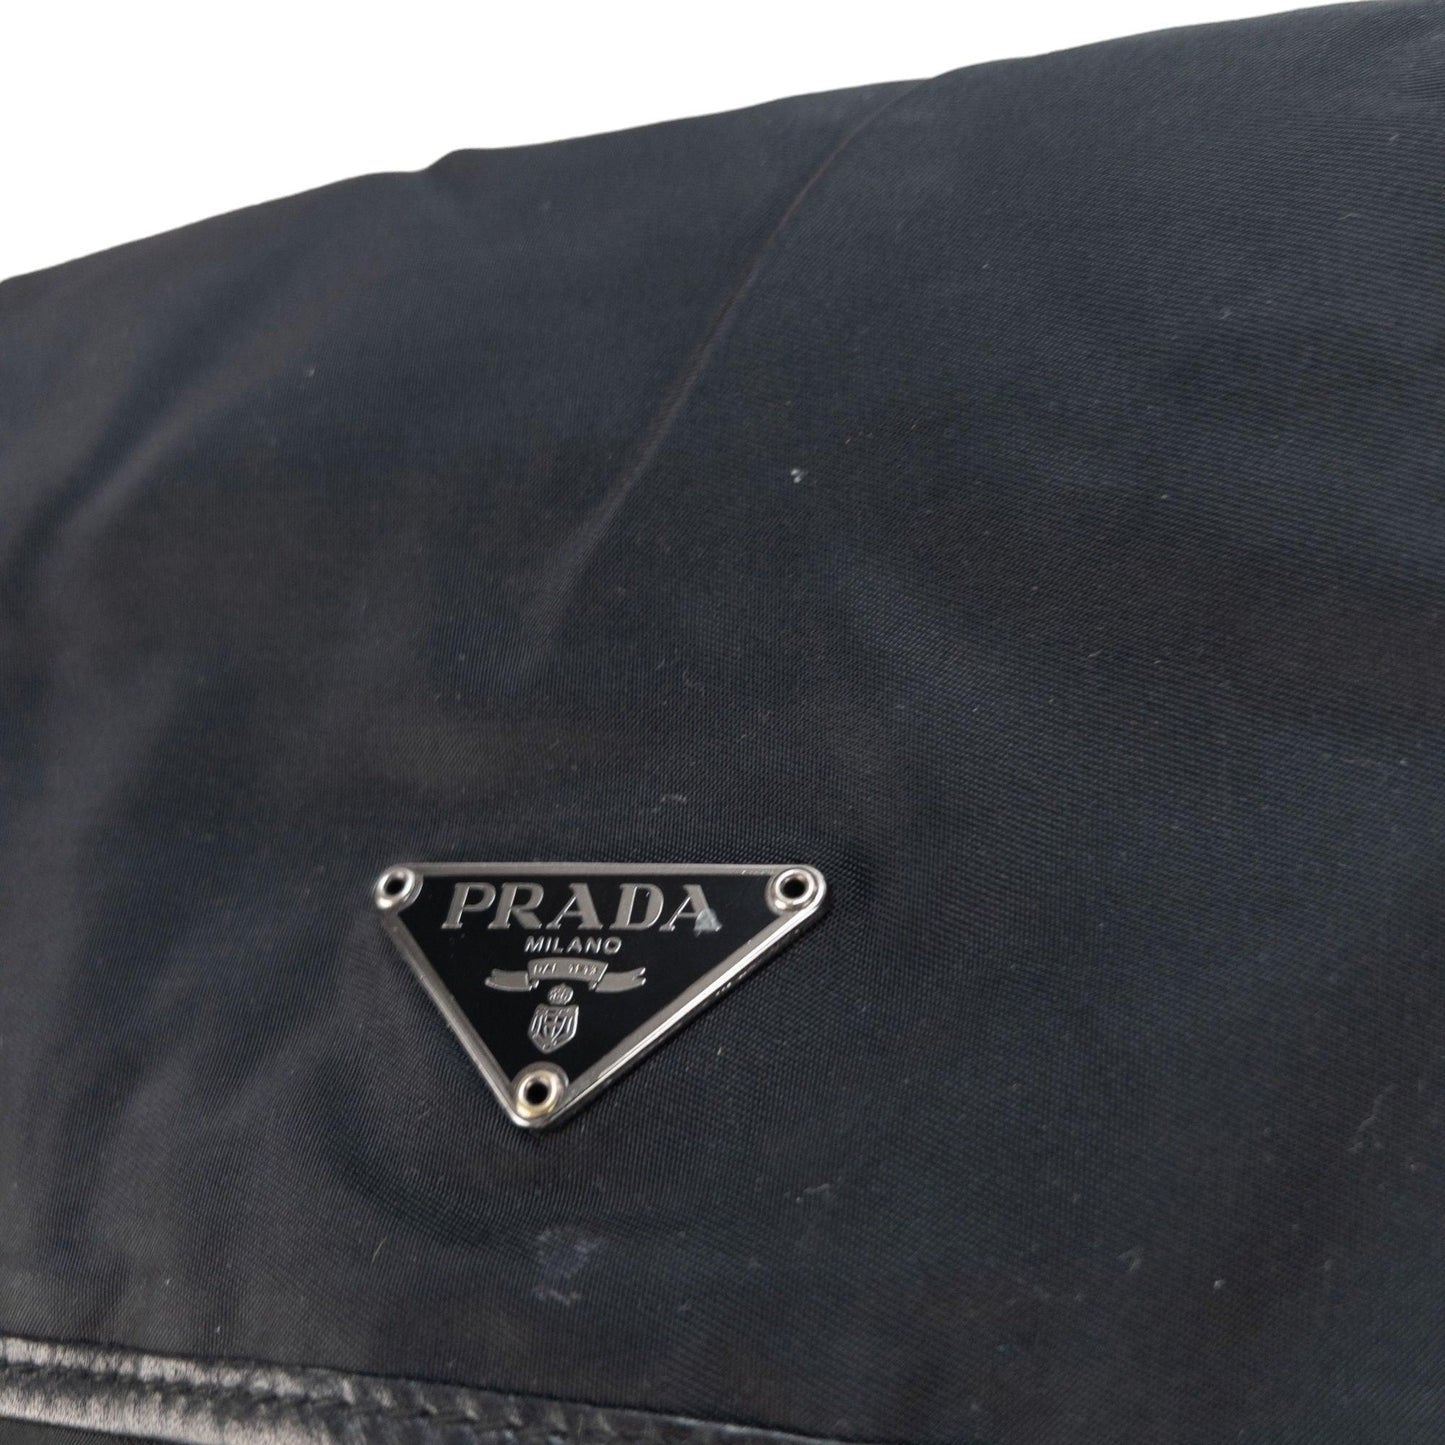 Vintage Prada Crossbody Bag